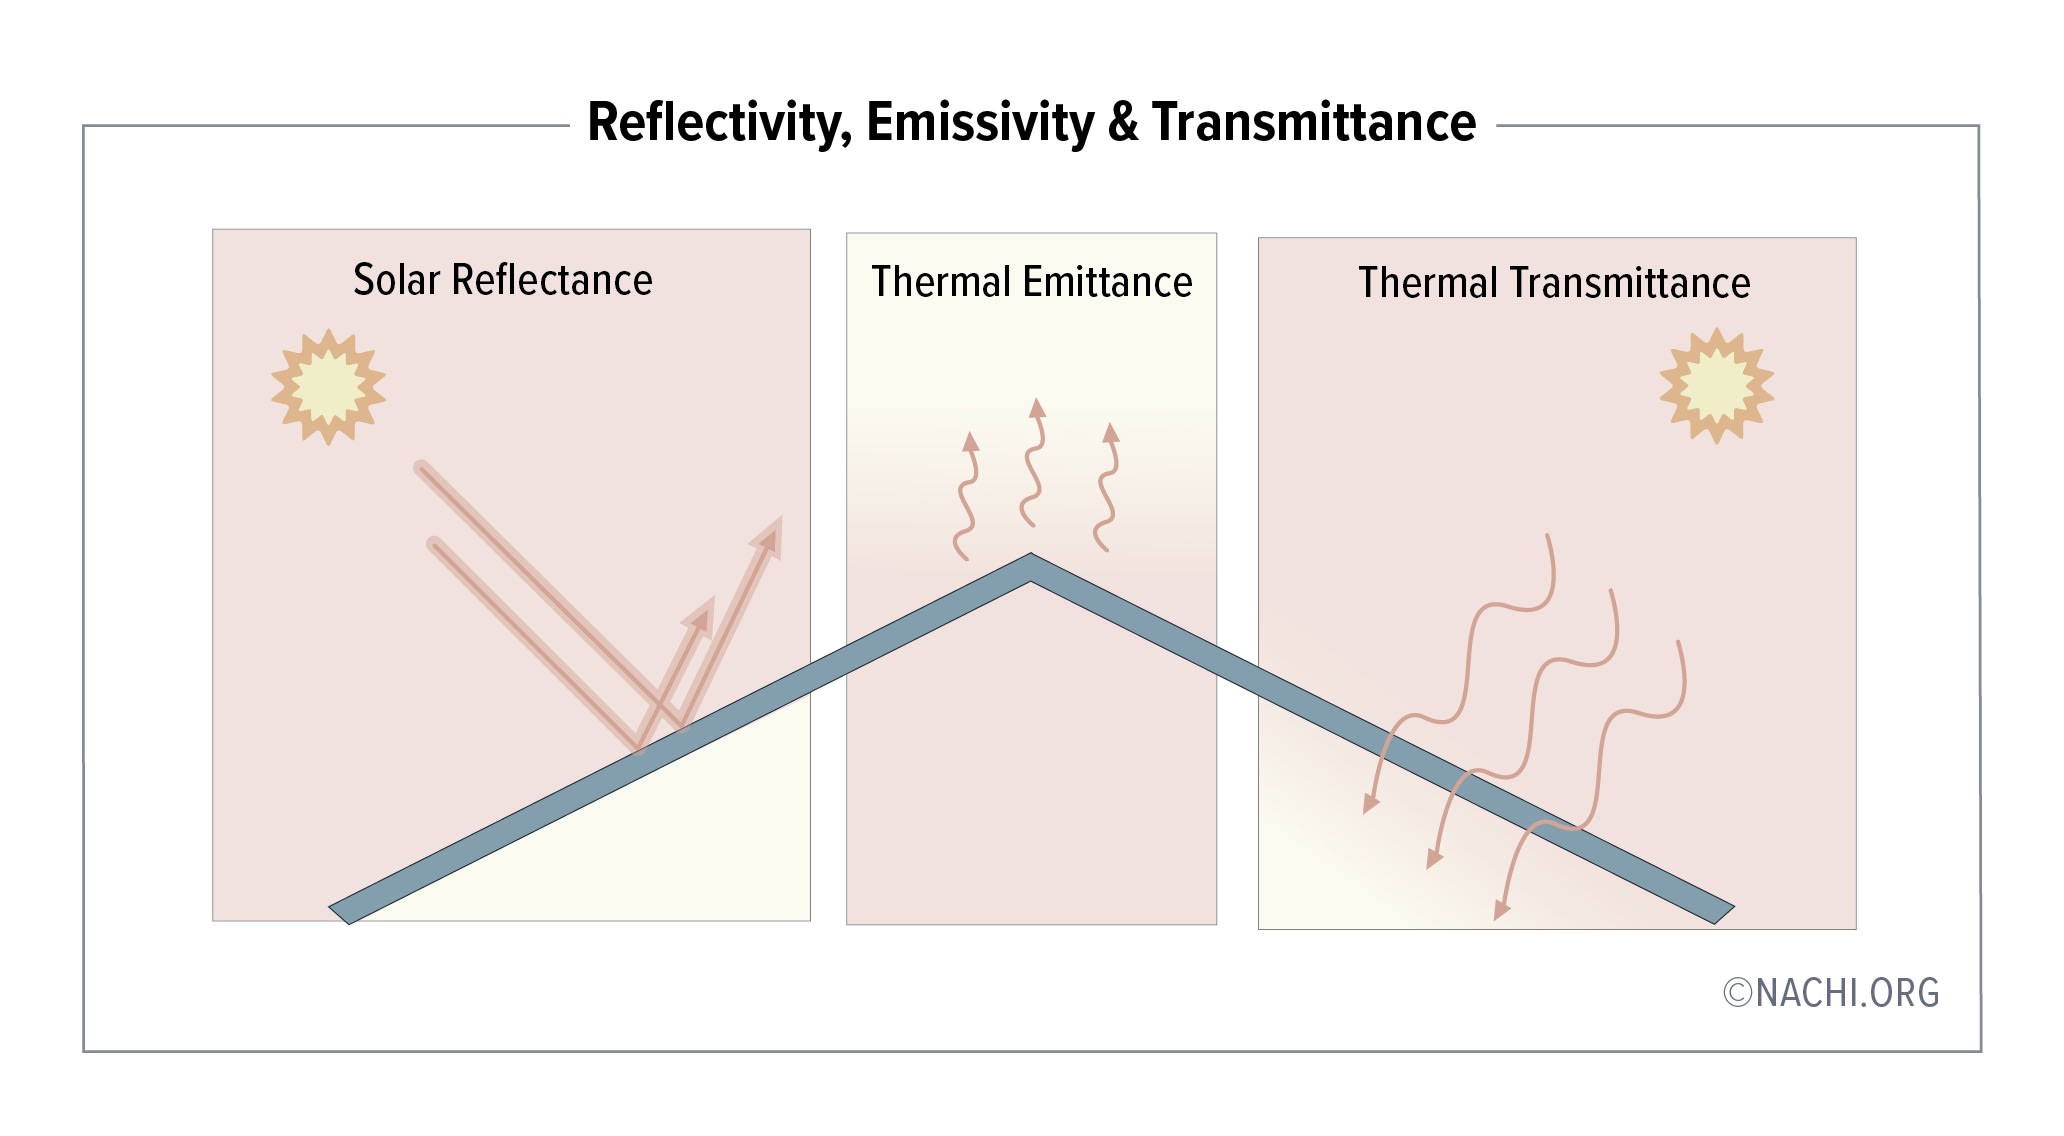 Solar Reflectance, Thermal Emittance, Thermal Transmittance